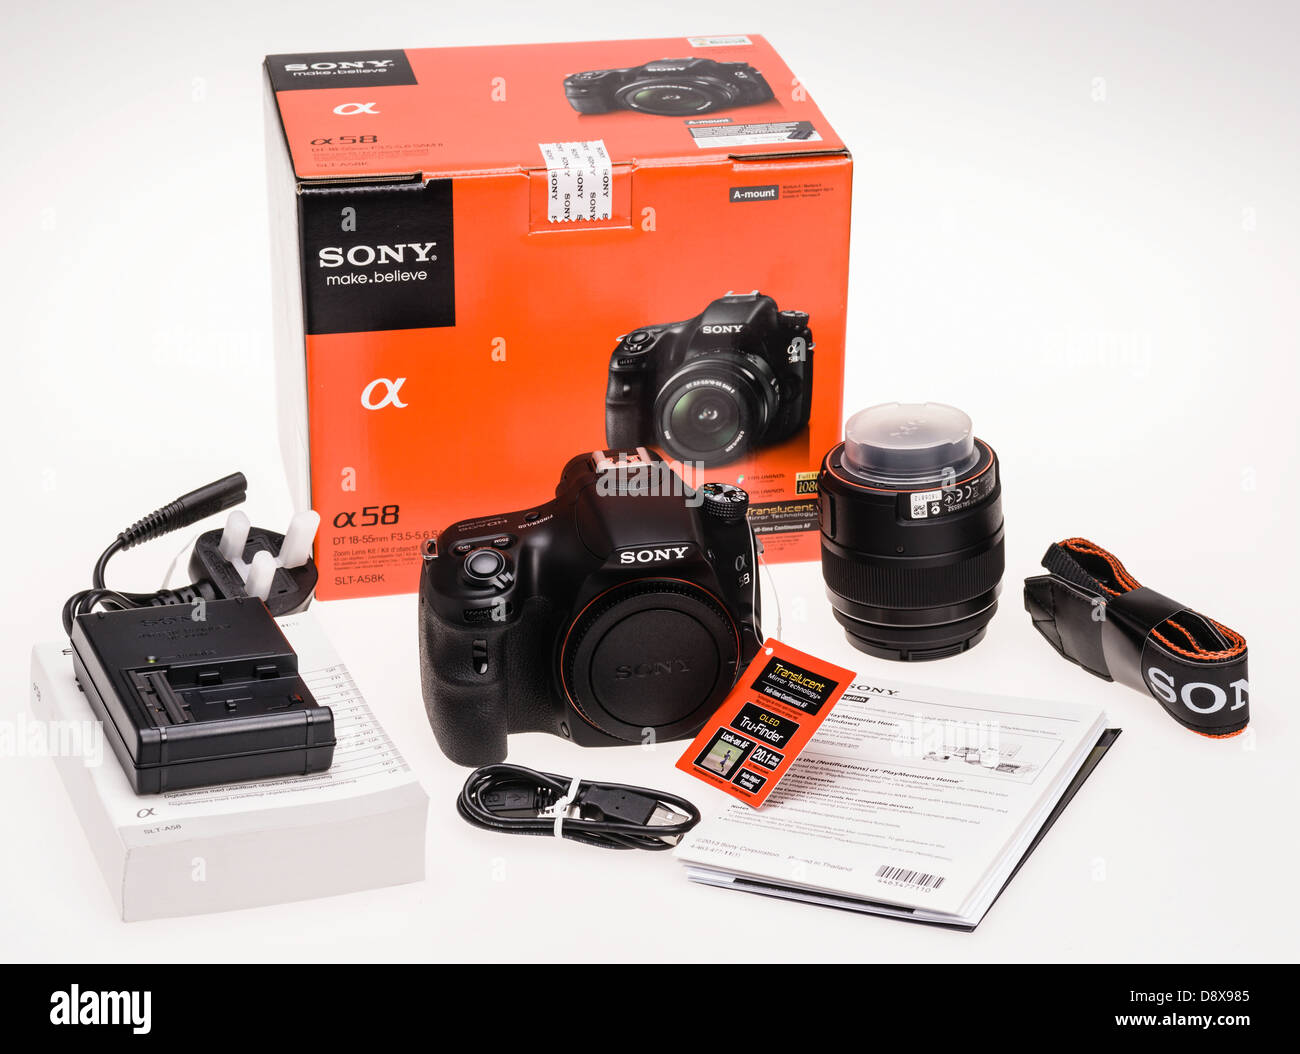 Sony Alpha 58 digital system camera - retail box package Stock Photo - Alamy